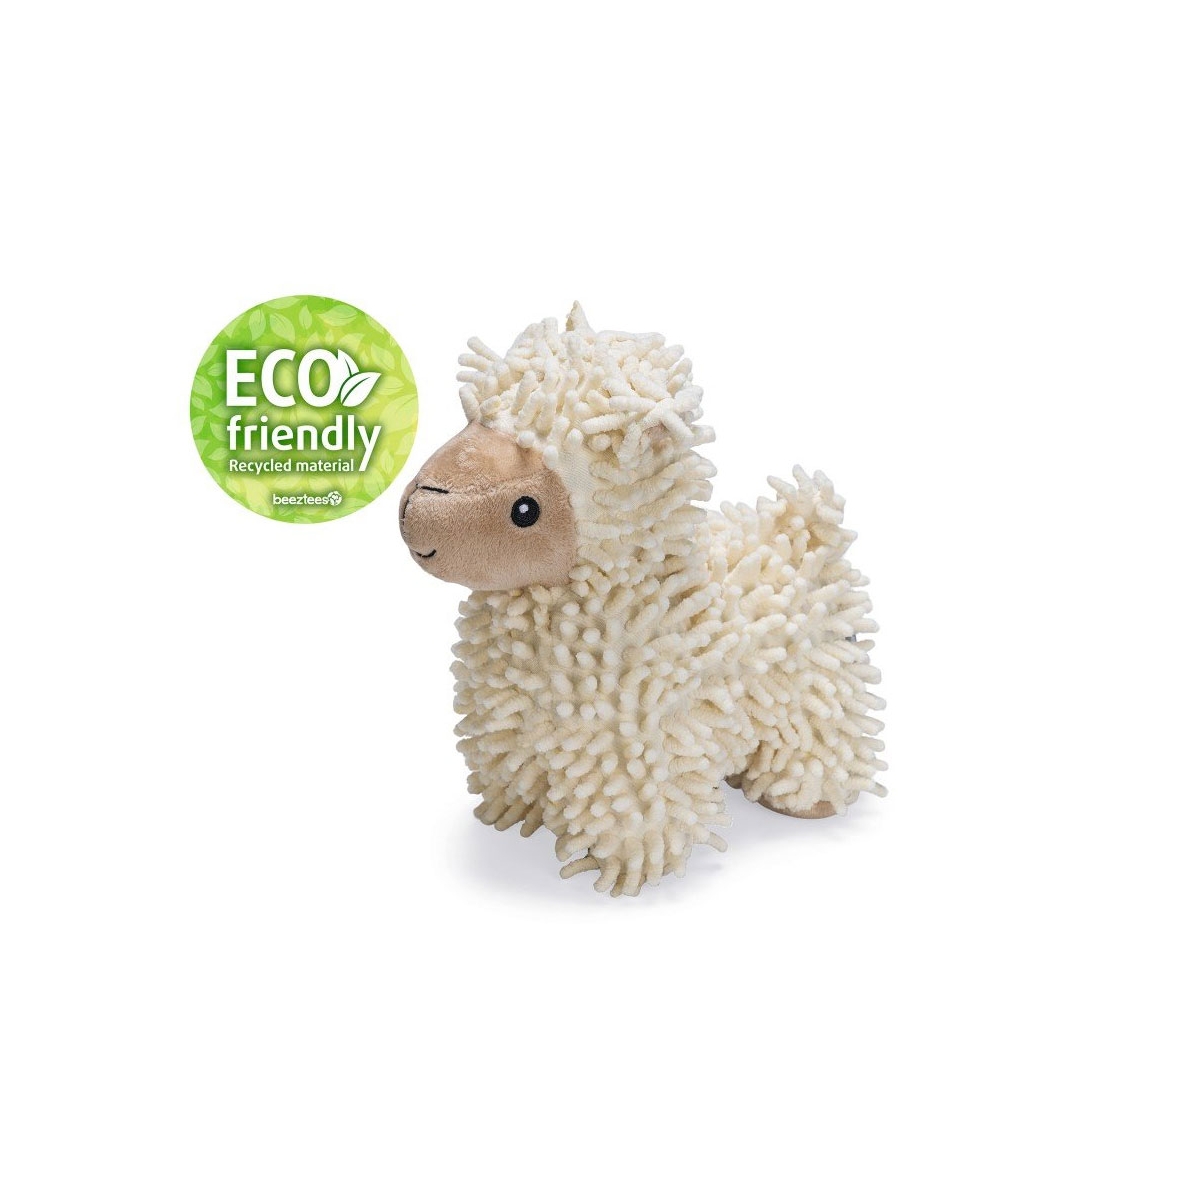 Beeztees Jovi Eco žaislas šunims avis, smėlio spalvos